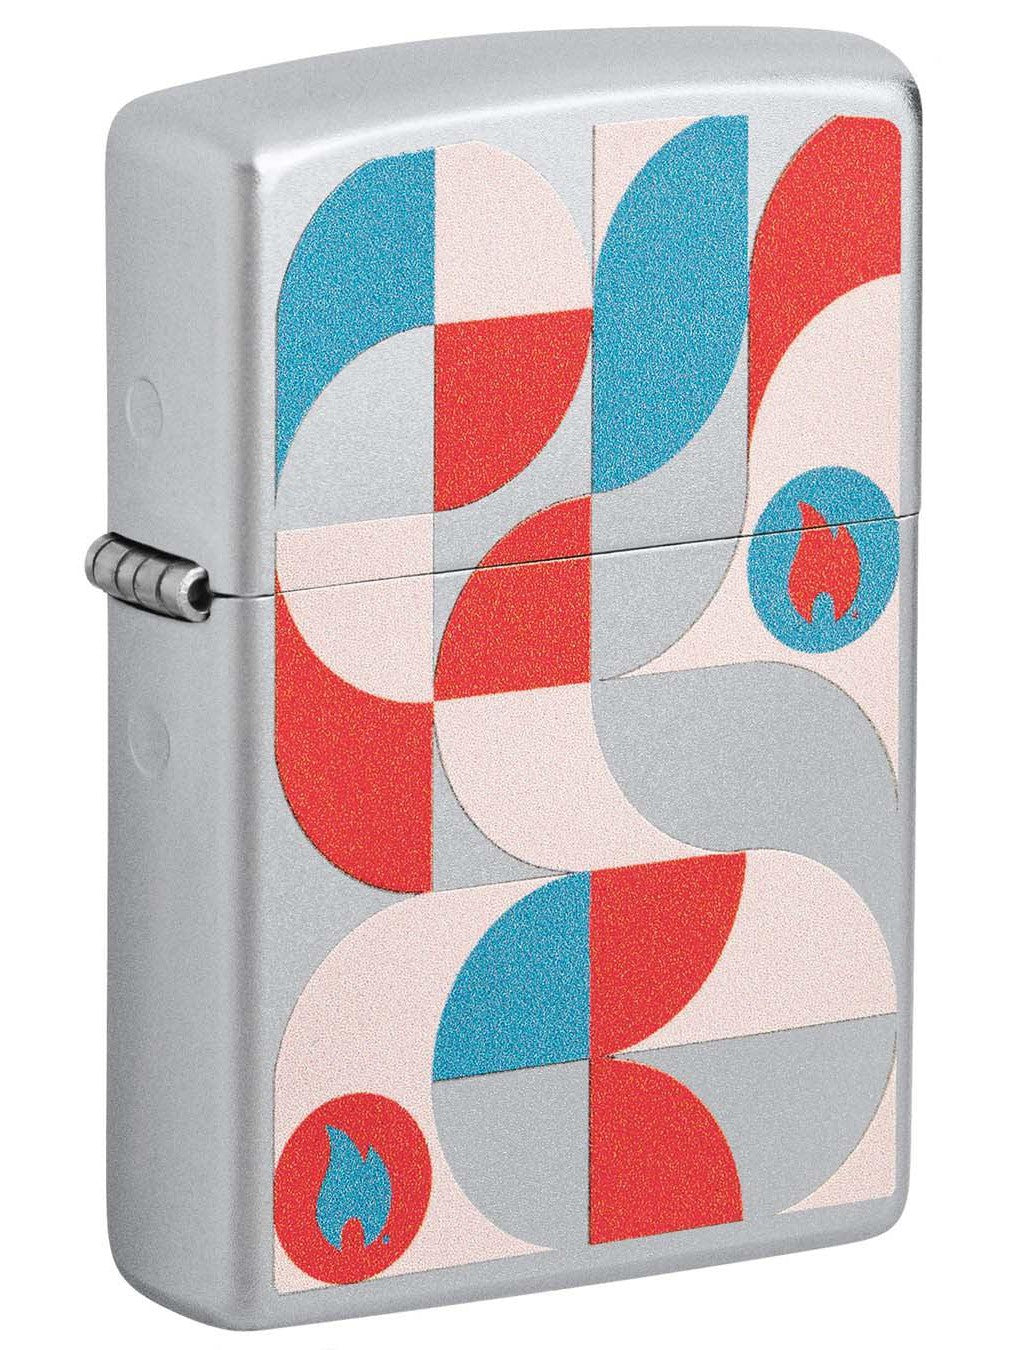 Zippo Lighter: Retro Zippo Design - Satin Chrome 48712